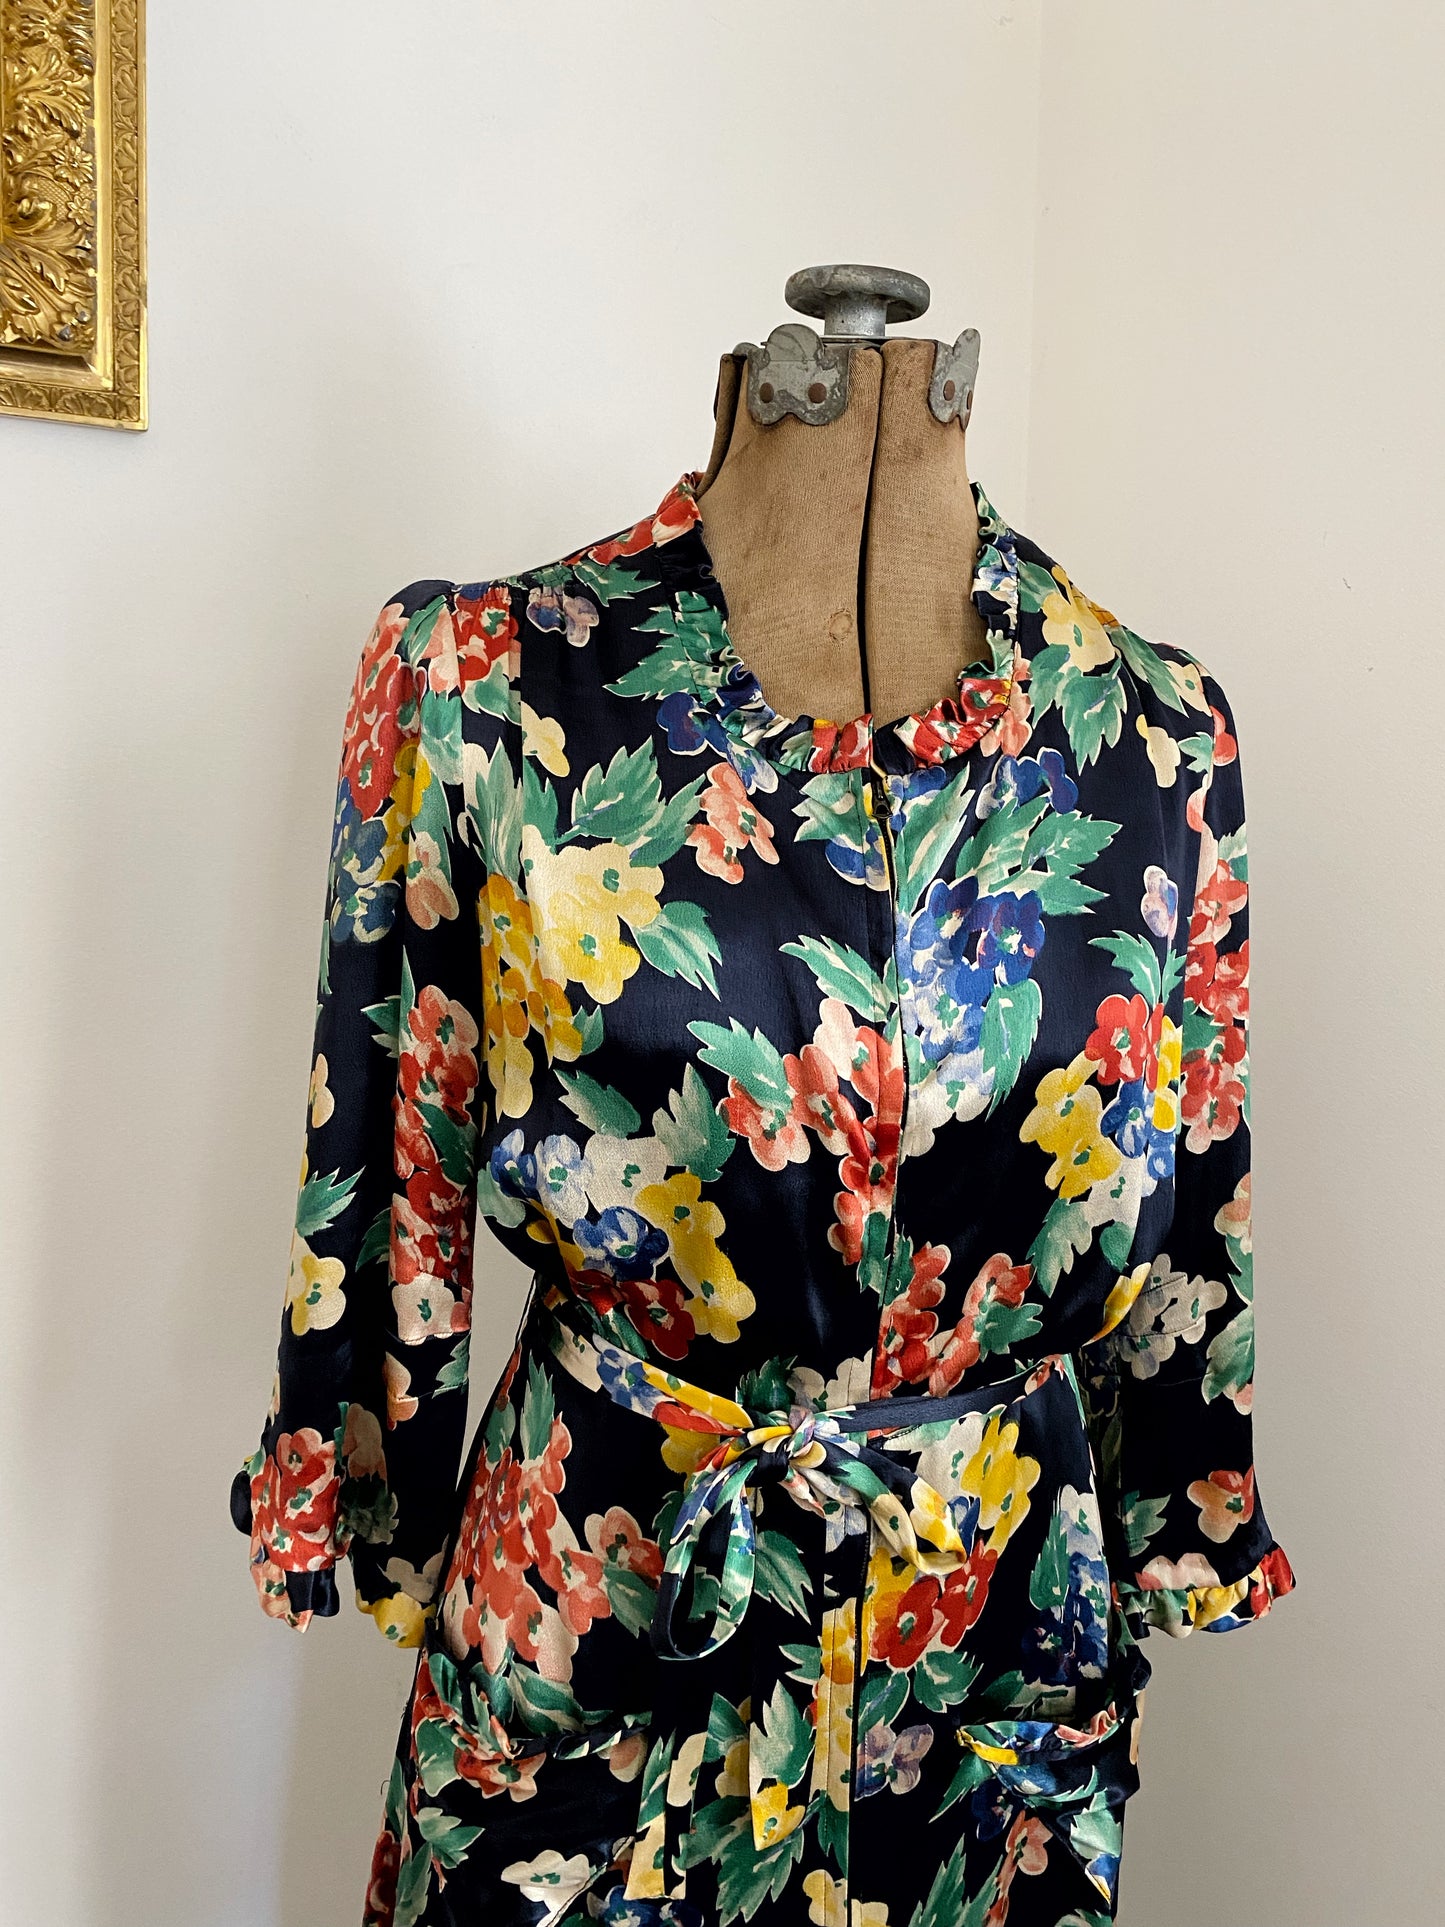 1930s Black Liquid Satin Zipper Front Dress w/ Multicolored Floral Print- M/L